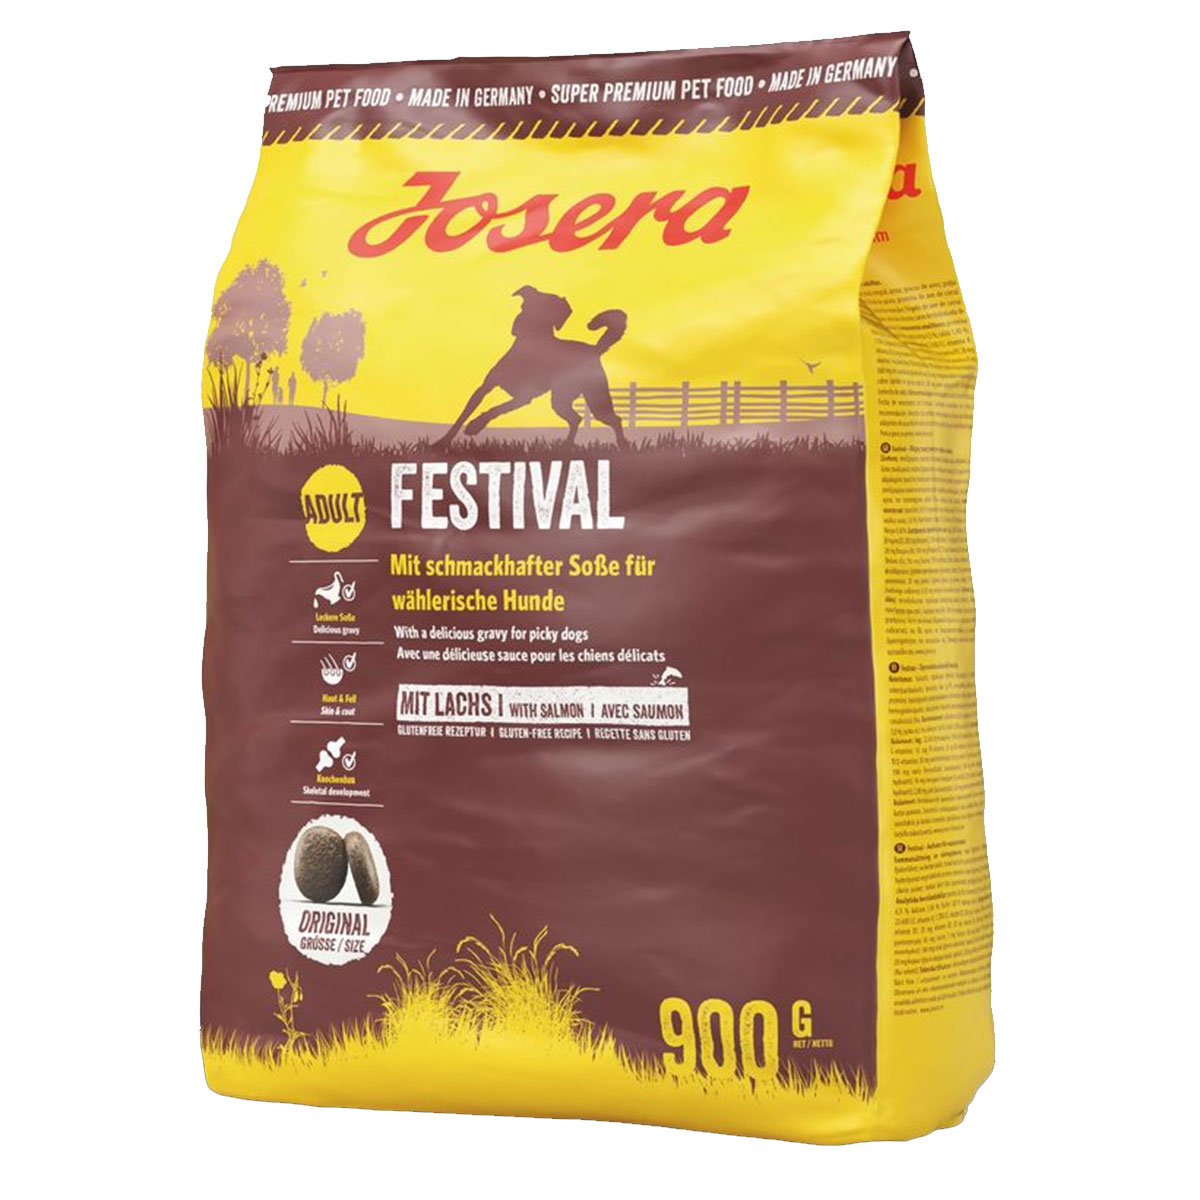 Josera Festival 900g